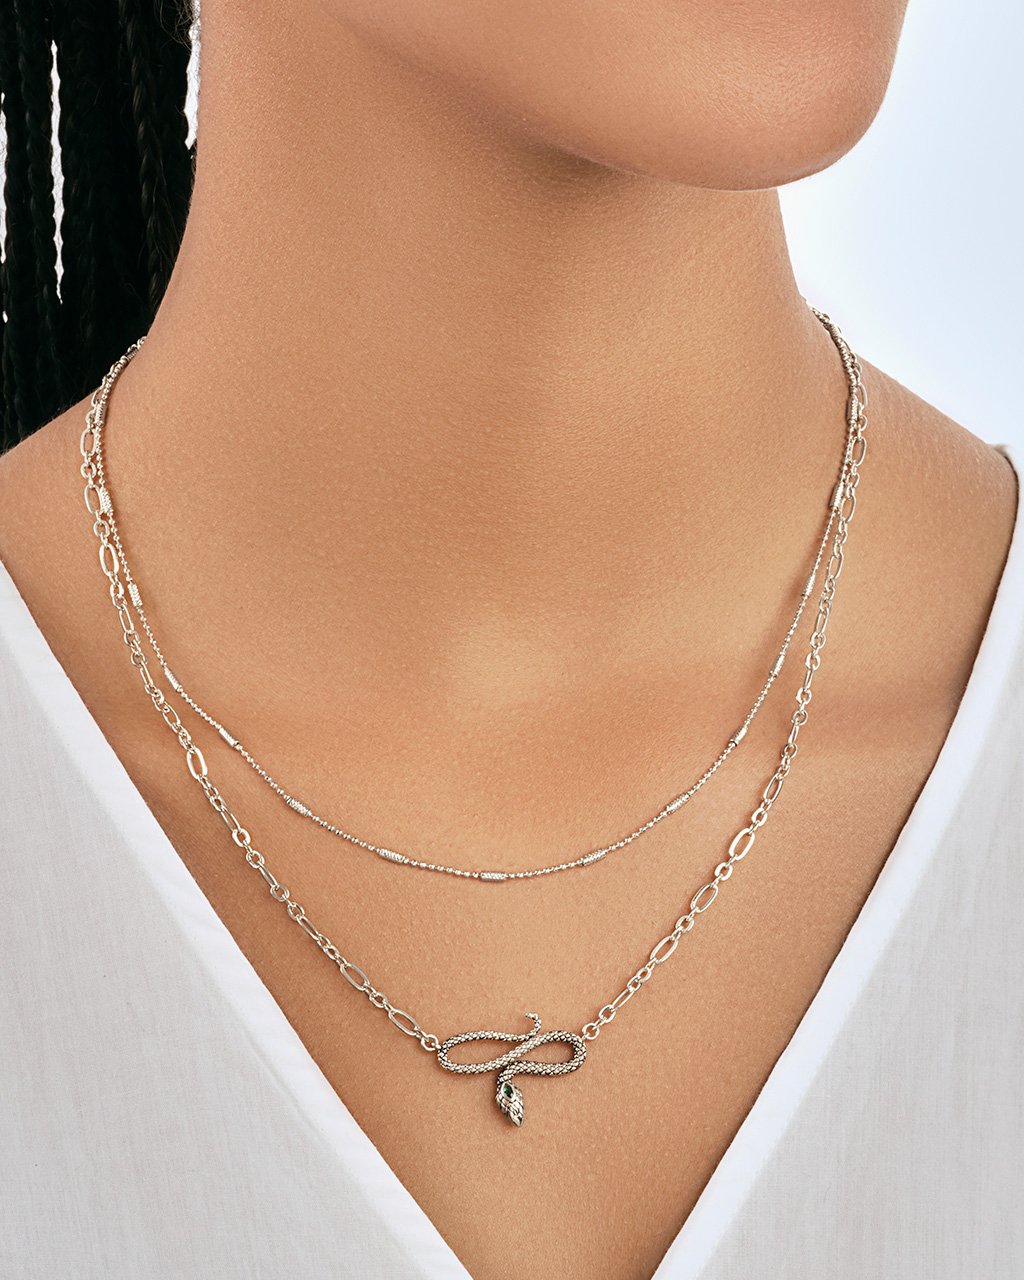 Linked Snake Layered Necklace Necklace Sterling Forever 